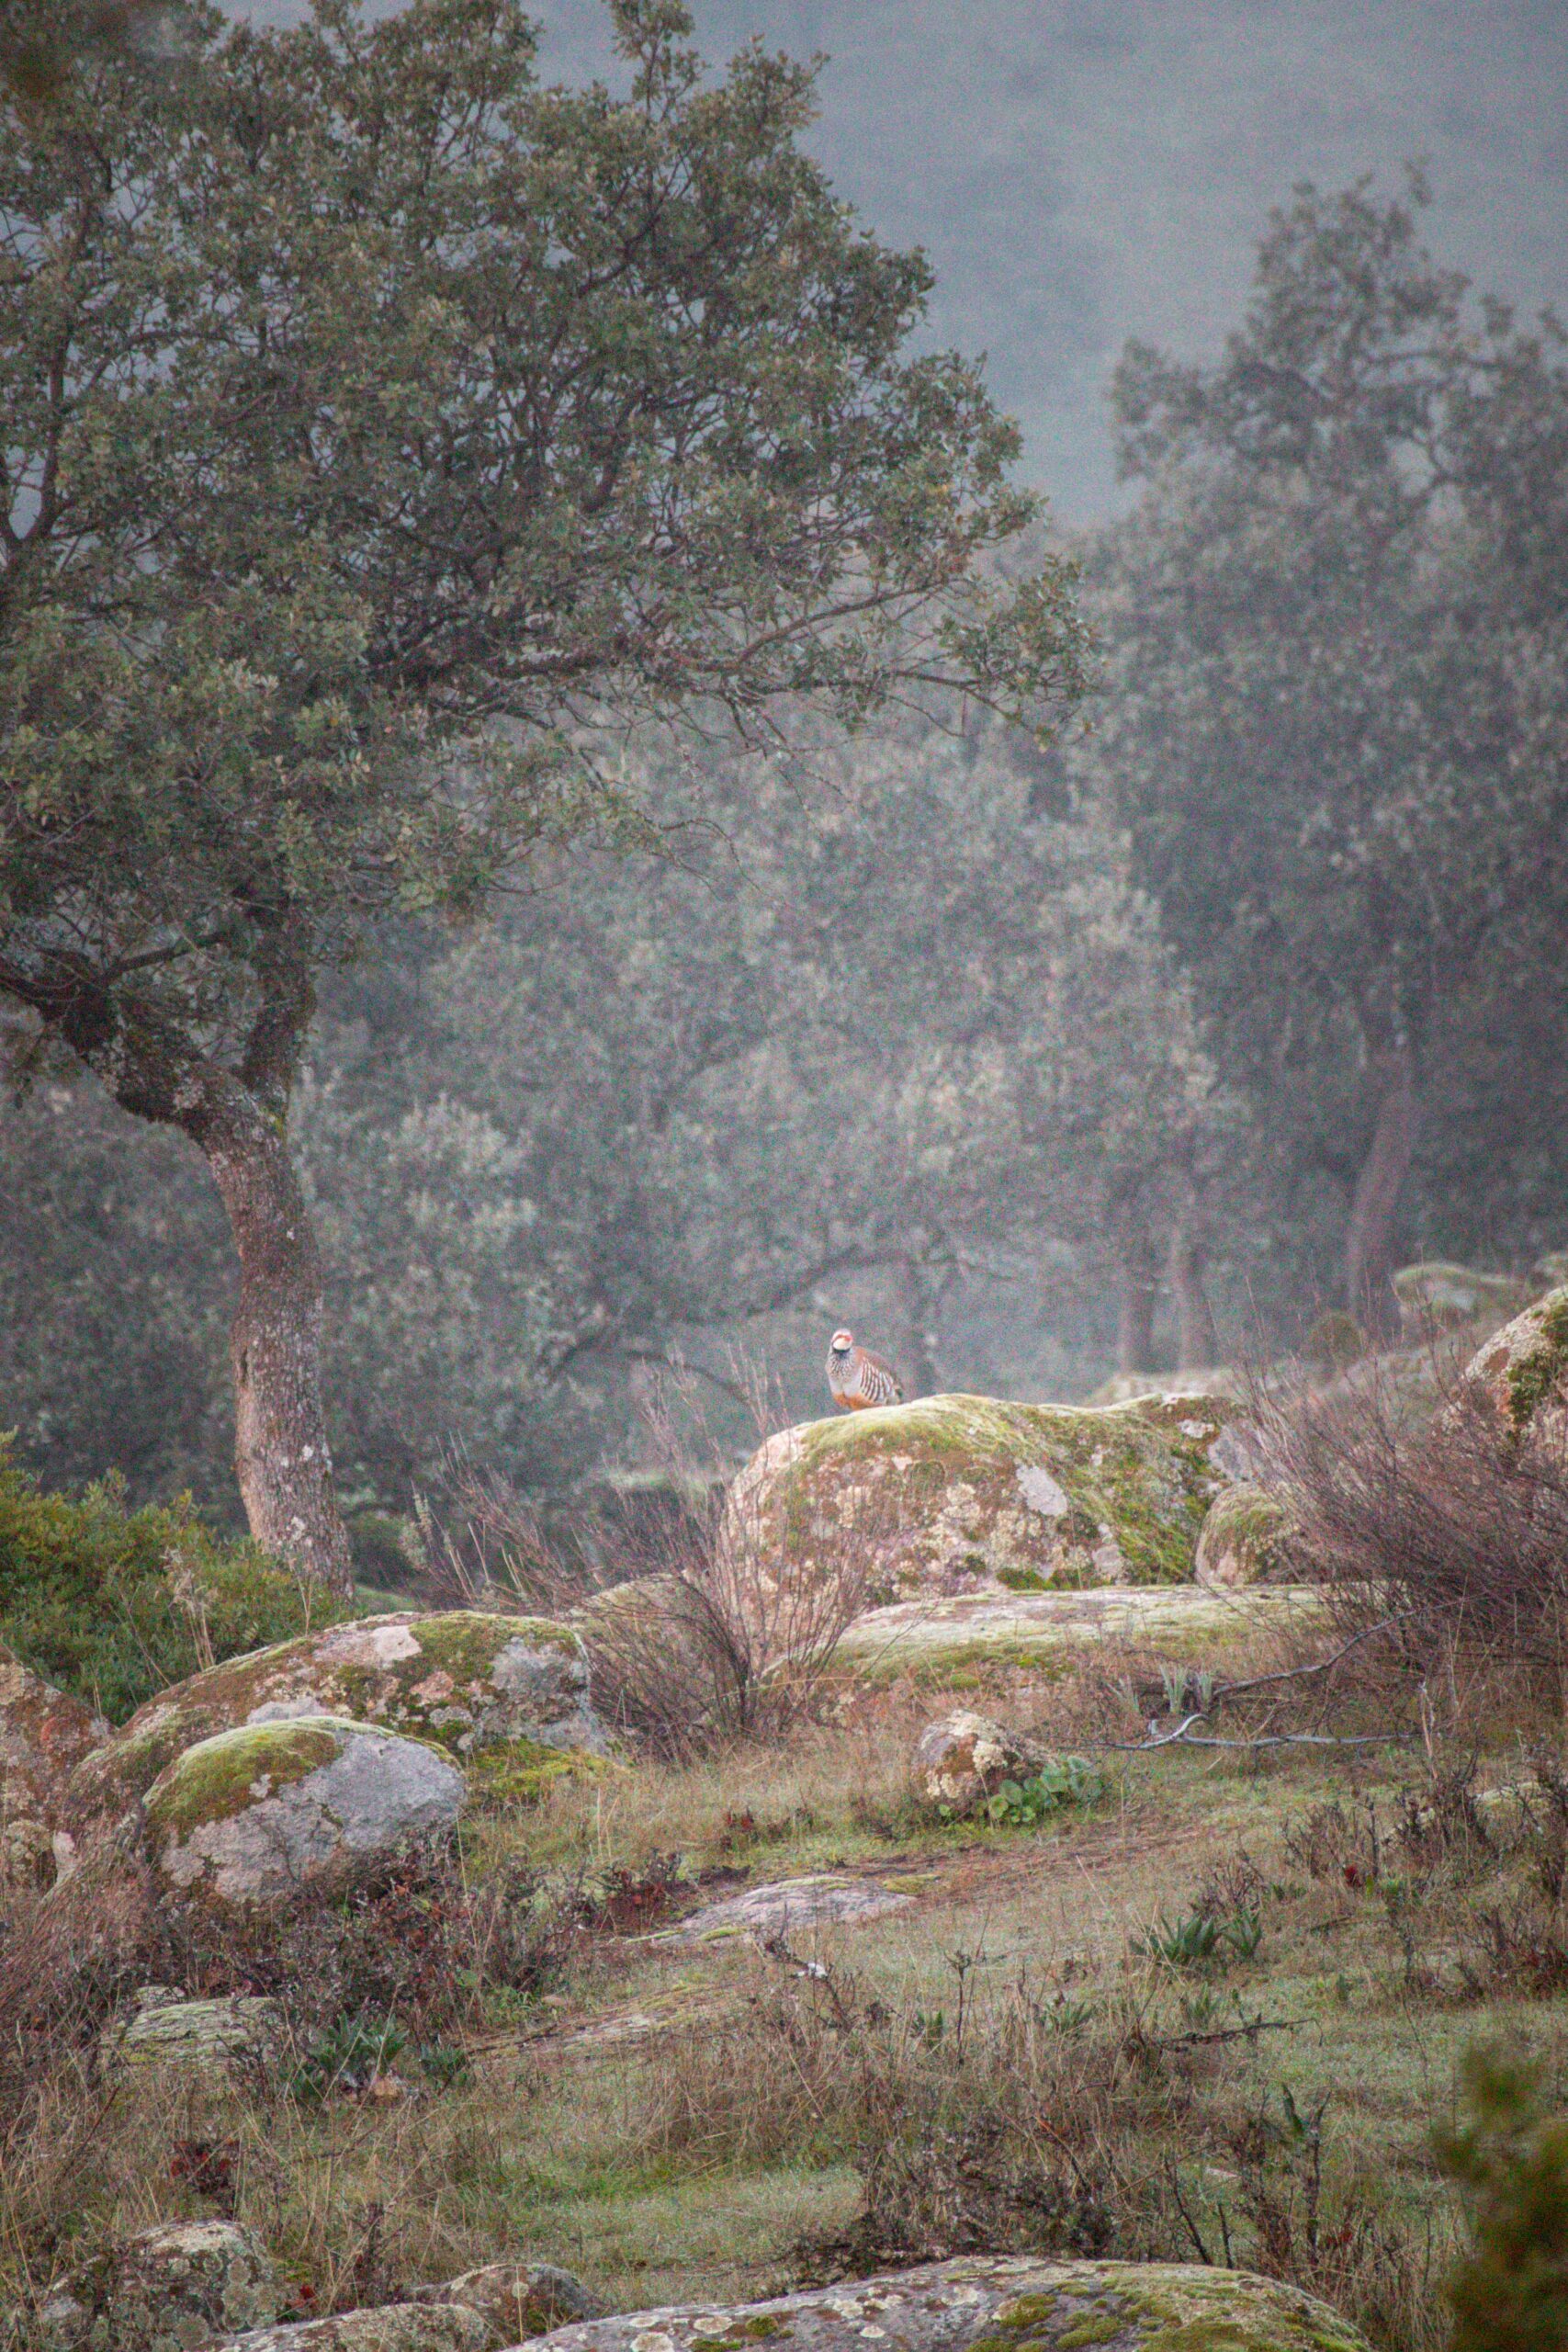 Red-legged Partridge (Alectoris rufa) on a rock in Andújar Natural Park, Provincia de Jaén, Andalusia, Spain